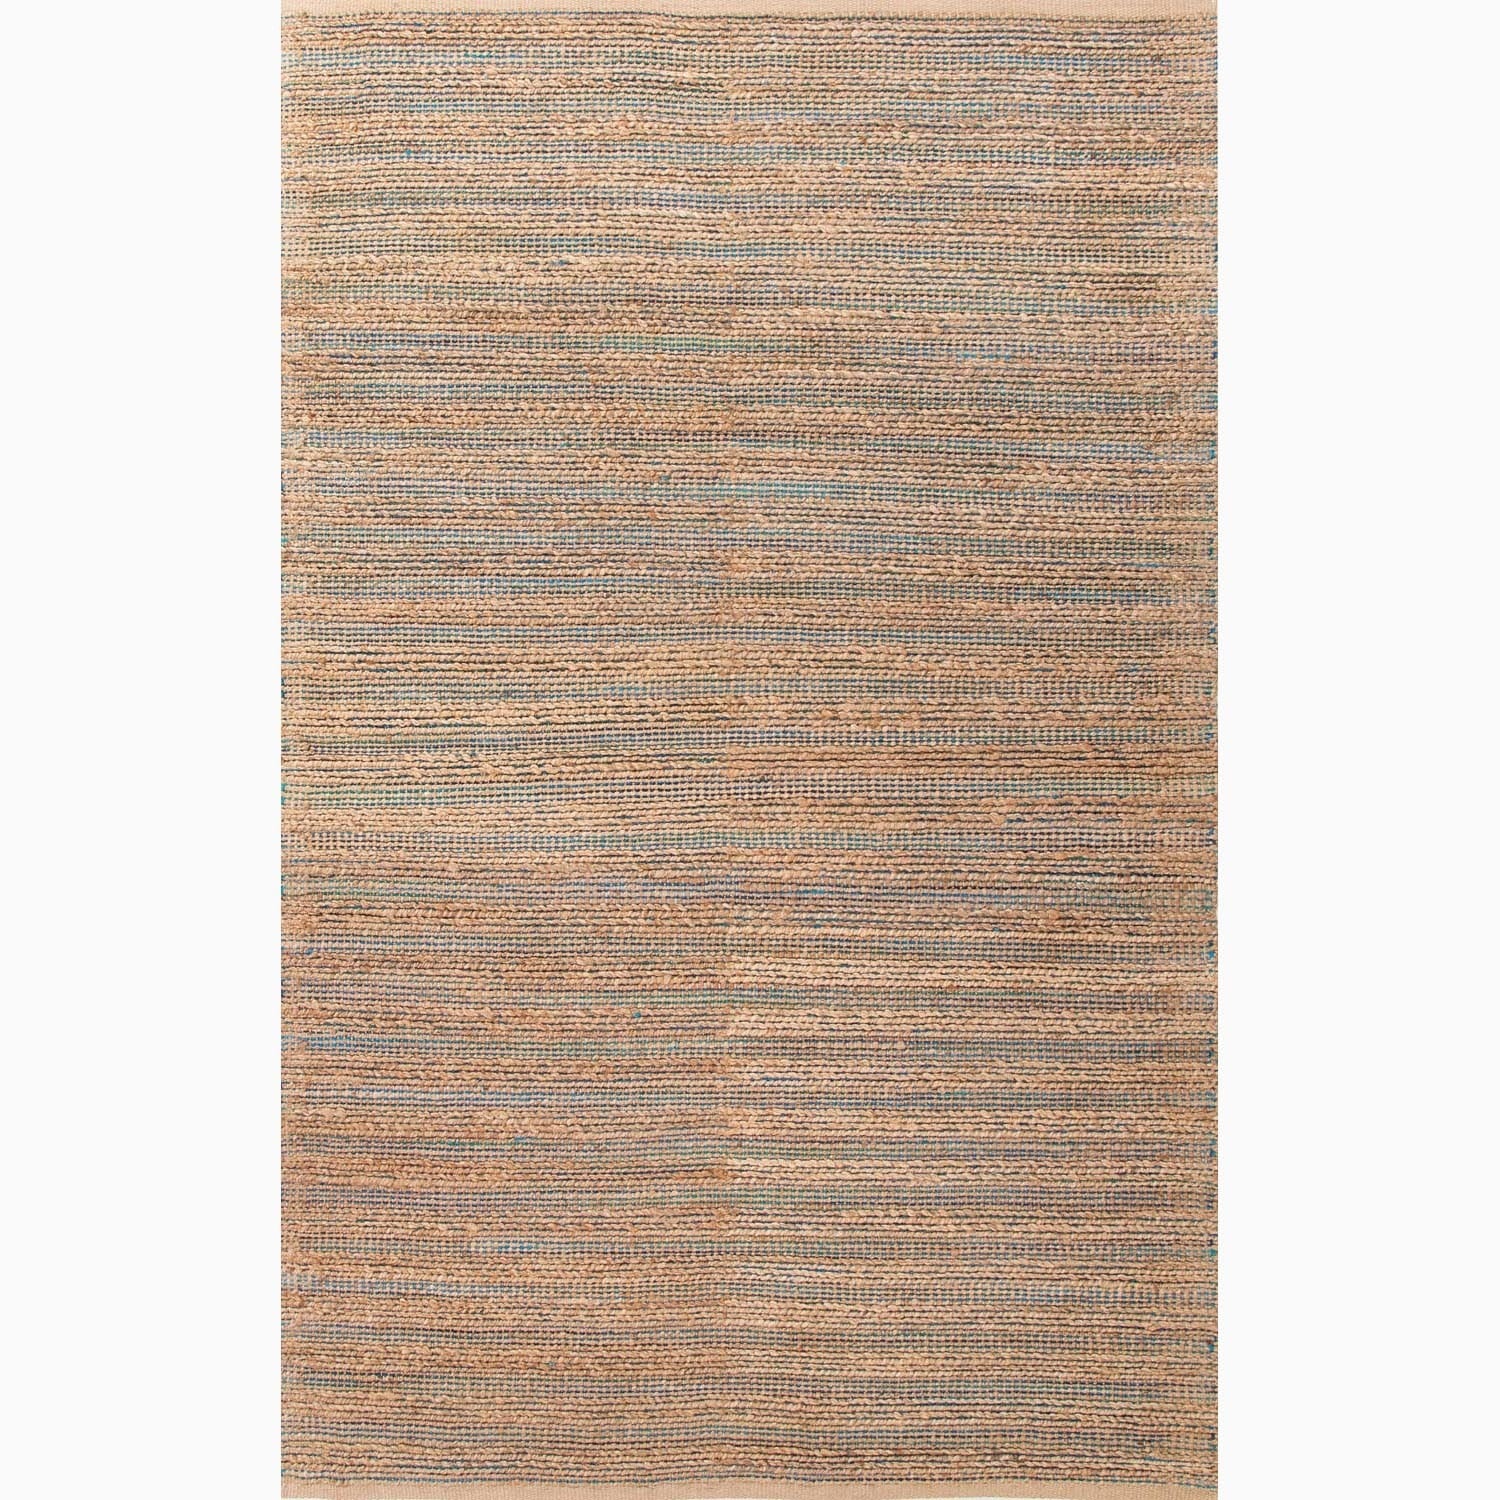 Handmade Solid Pattern Blue/ Tan Cotton/ Jute Rug (26 X 4)